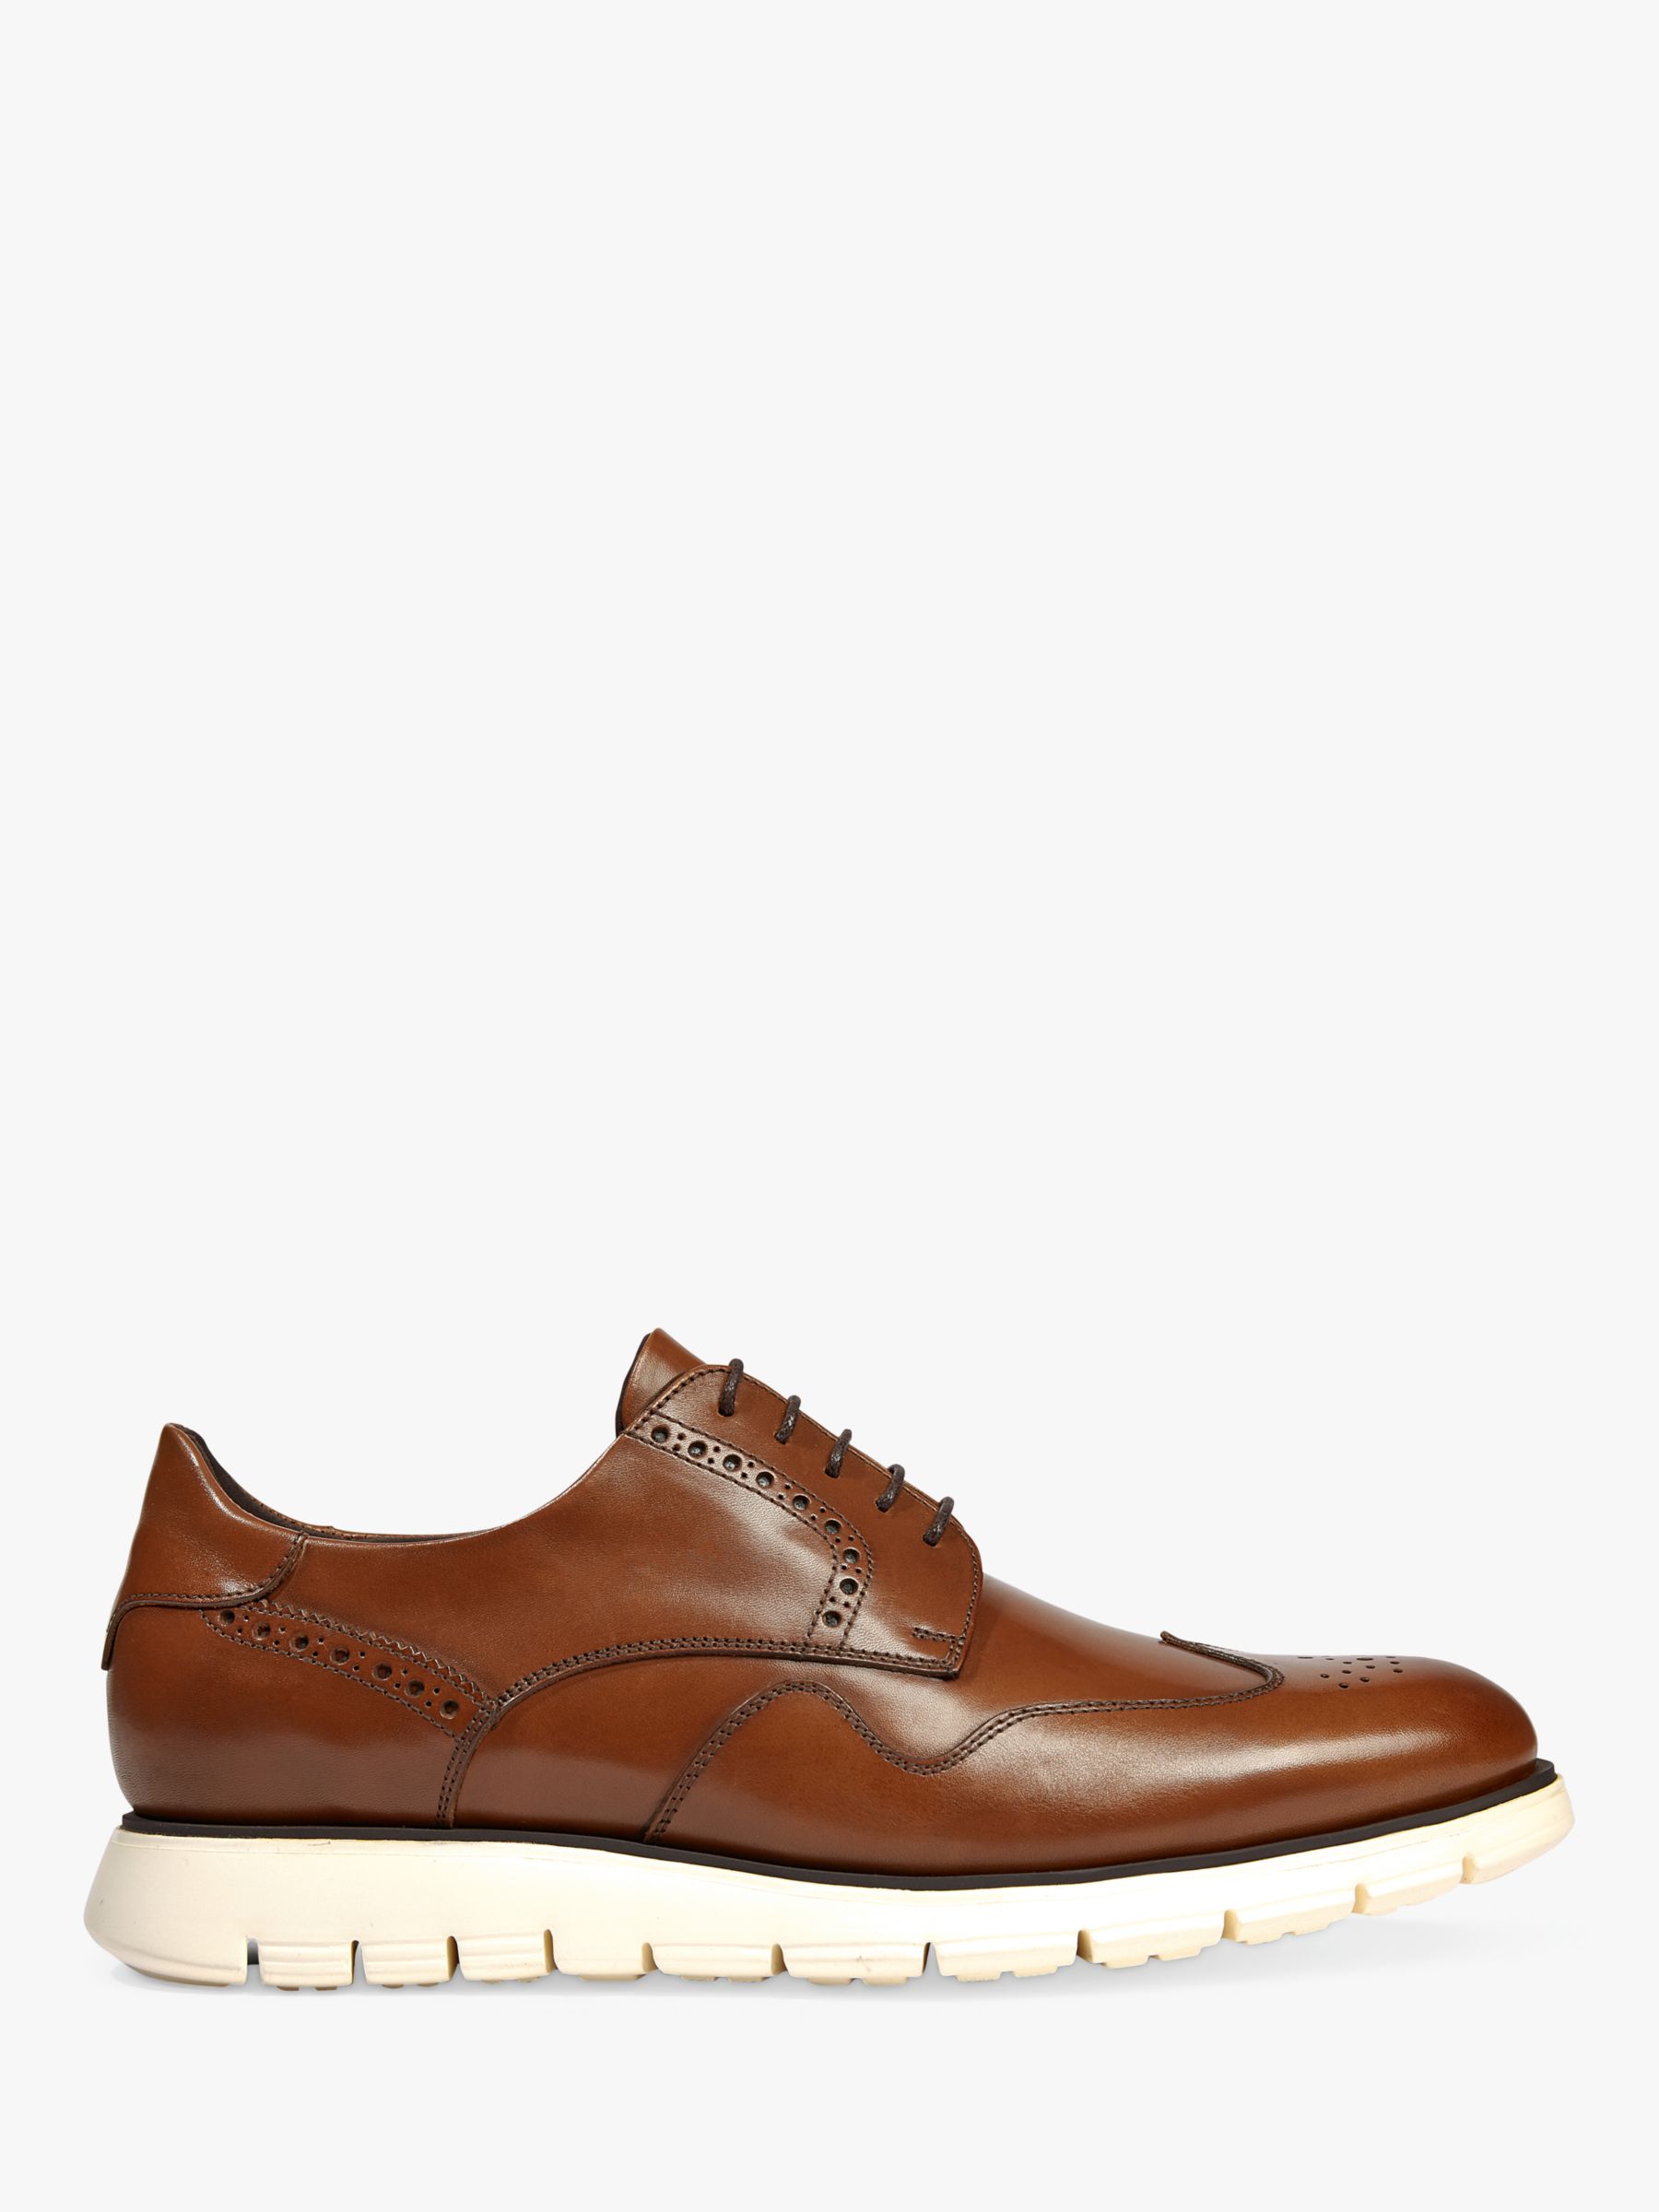 Charles Tyrwhitt Leather Hybrid Formal Trainer Shoes, Chestnut Brown at ...